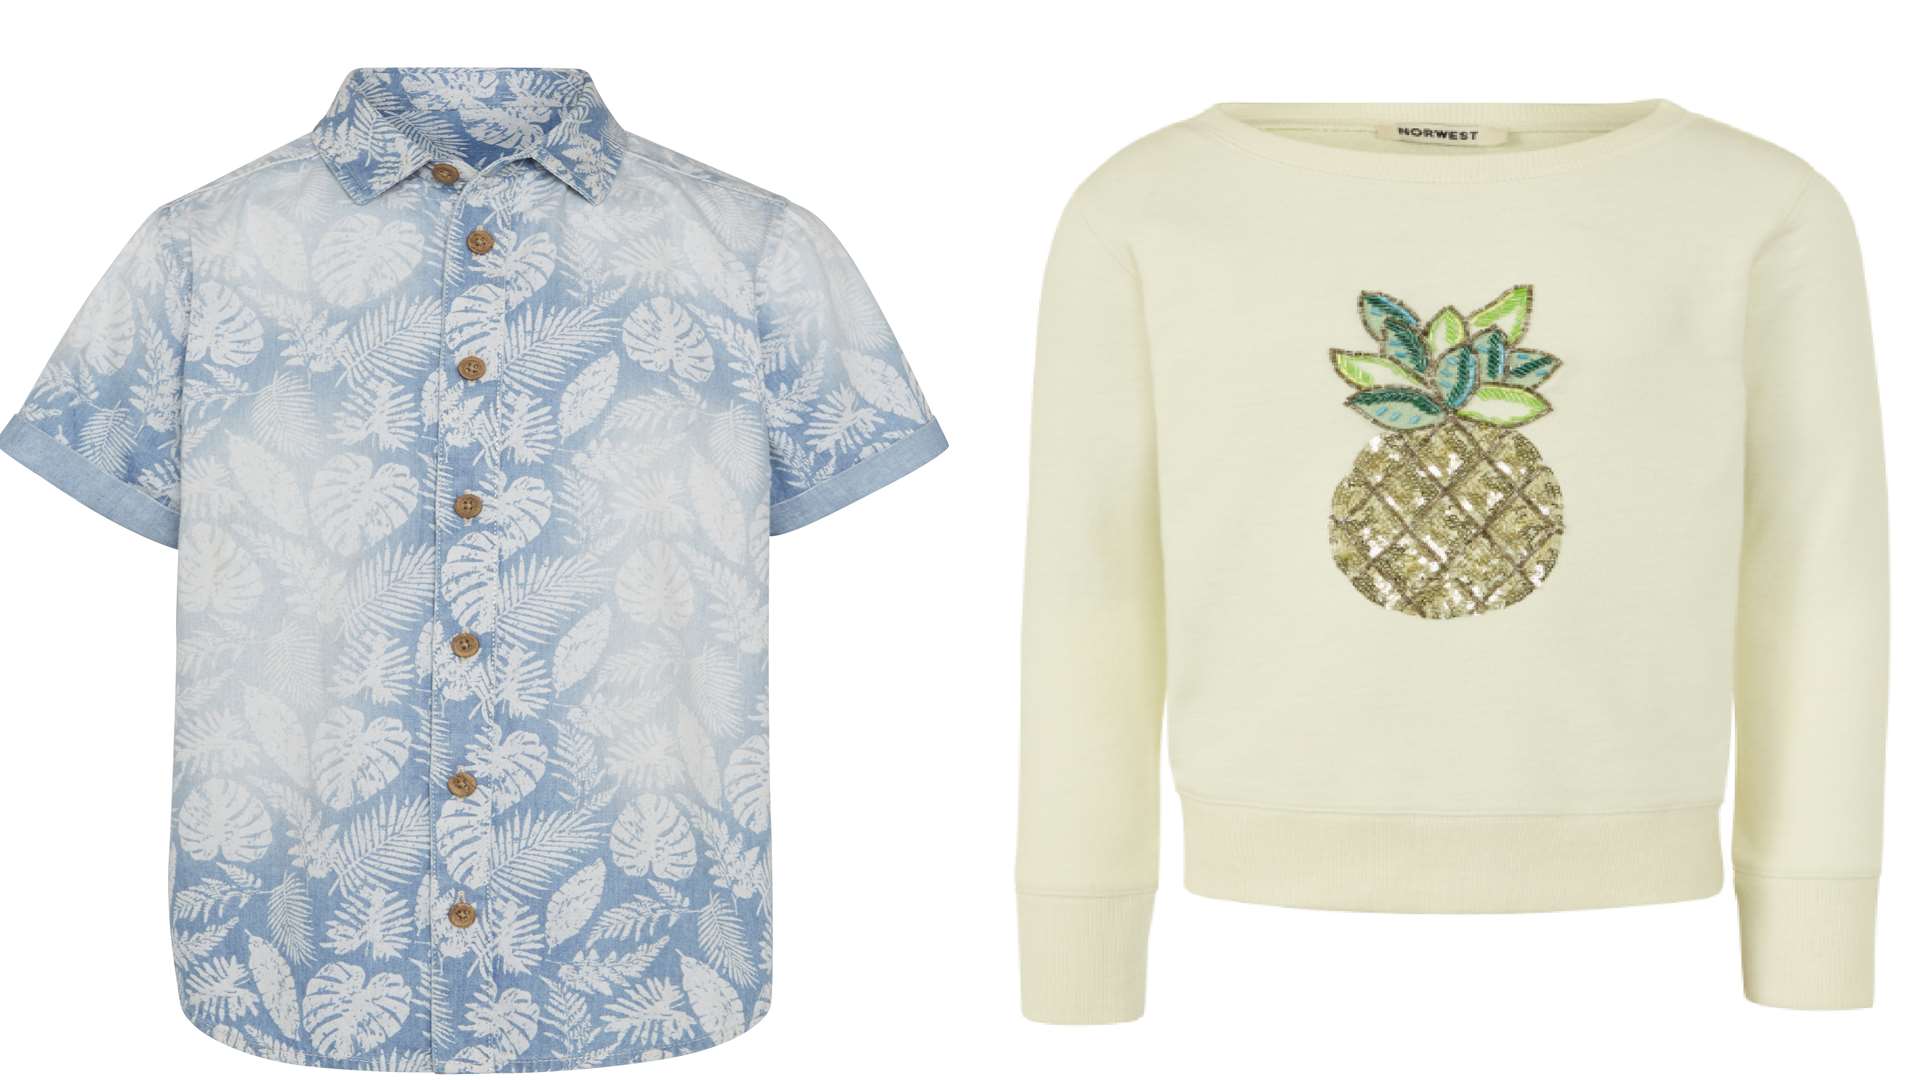 Bleach denim shirt, £7, and pineapple sweat, £9. Both at Matalan